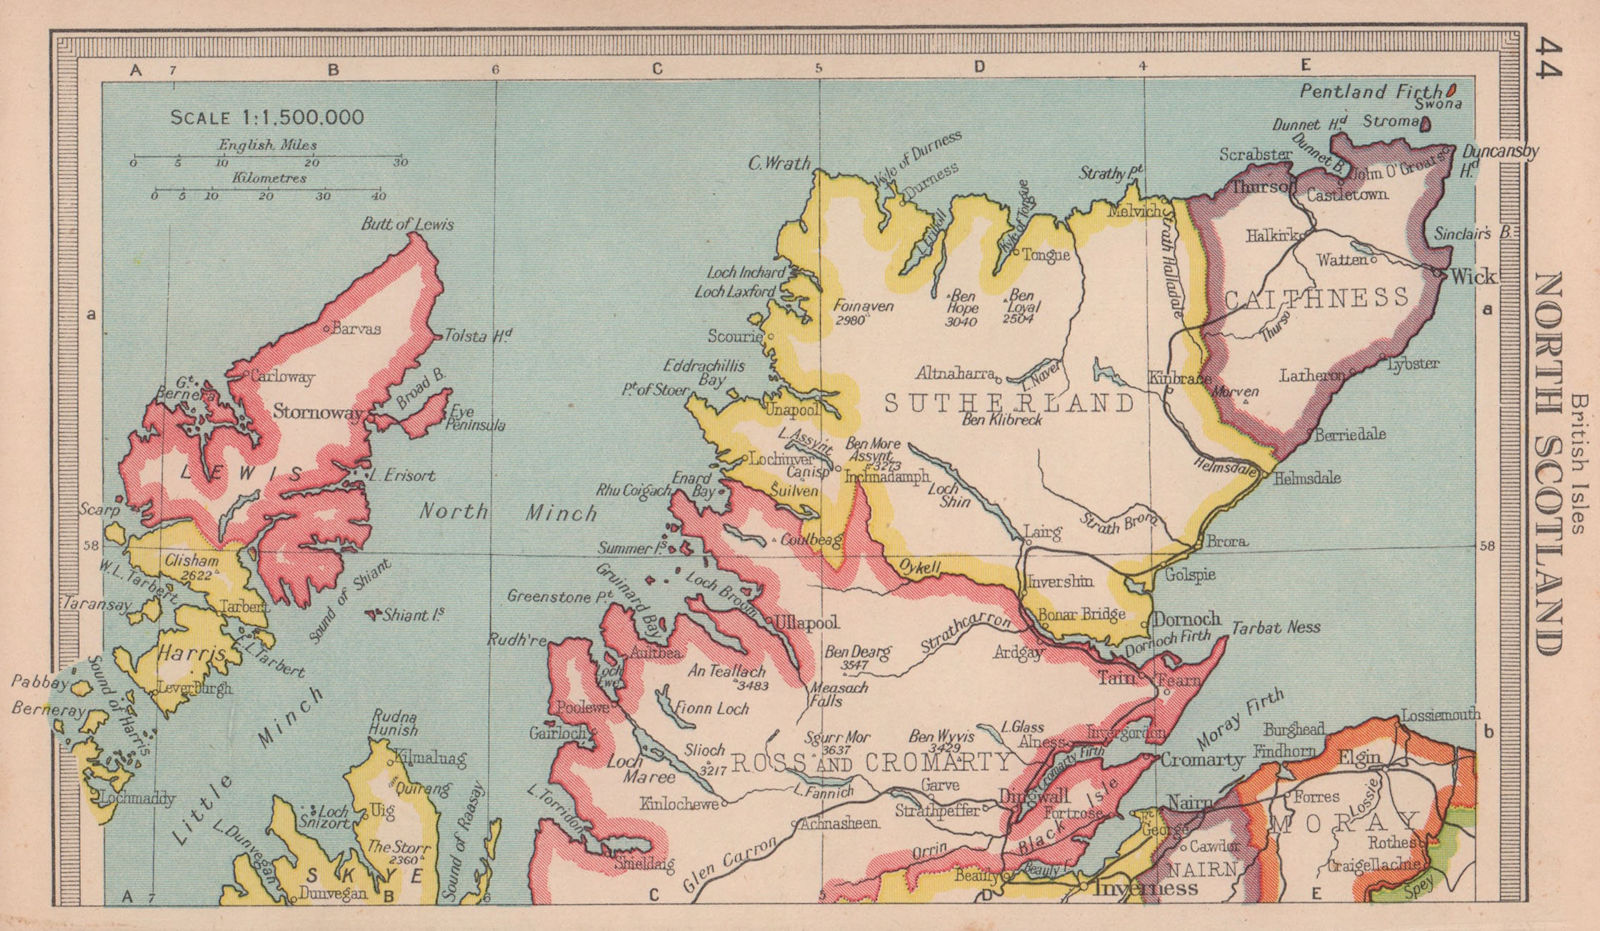 Associate Product Northern Scotland. Highlands & Islands. BARTHOLOMEW 1949 old vintage map chart